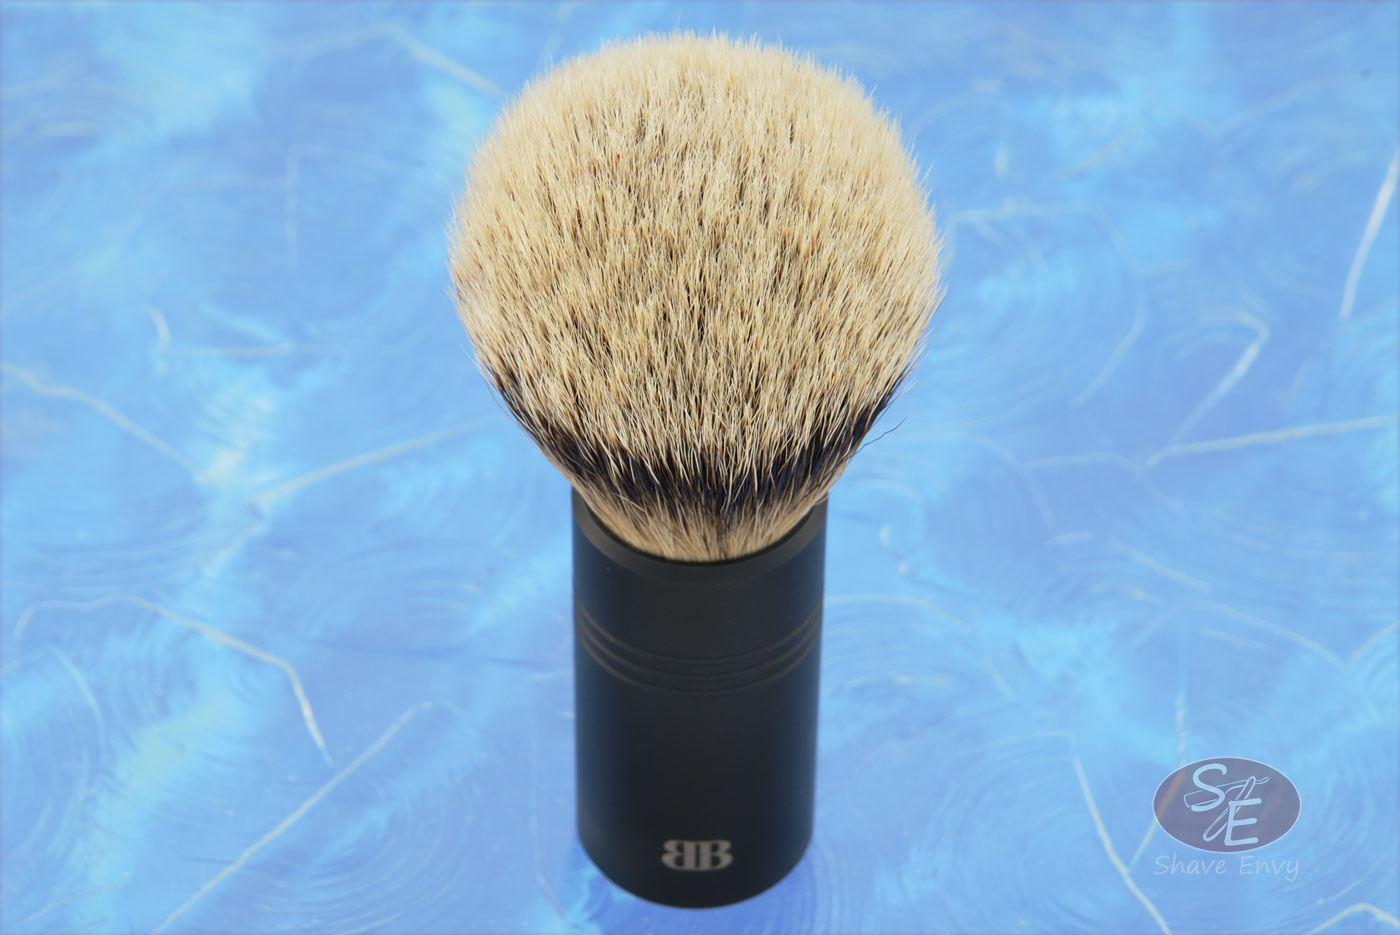 Silvertip Badger Bristle Shaving Brush with Aluminum, Black Anodized (22mm Knot)